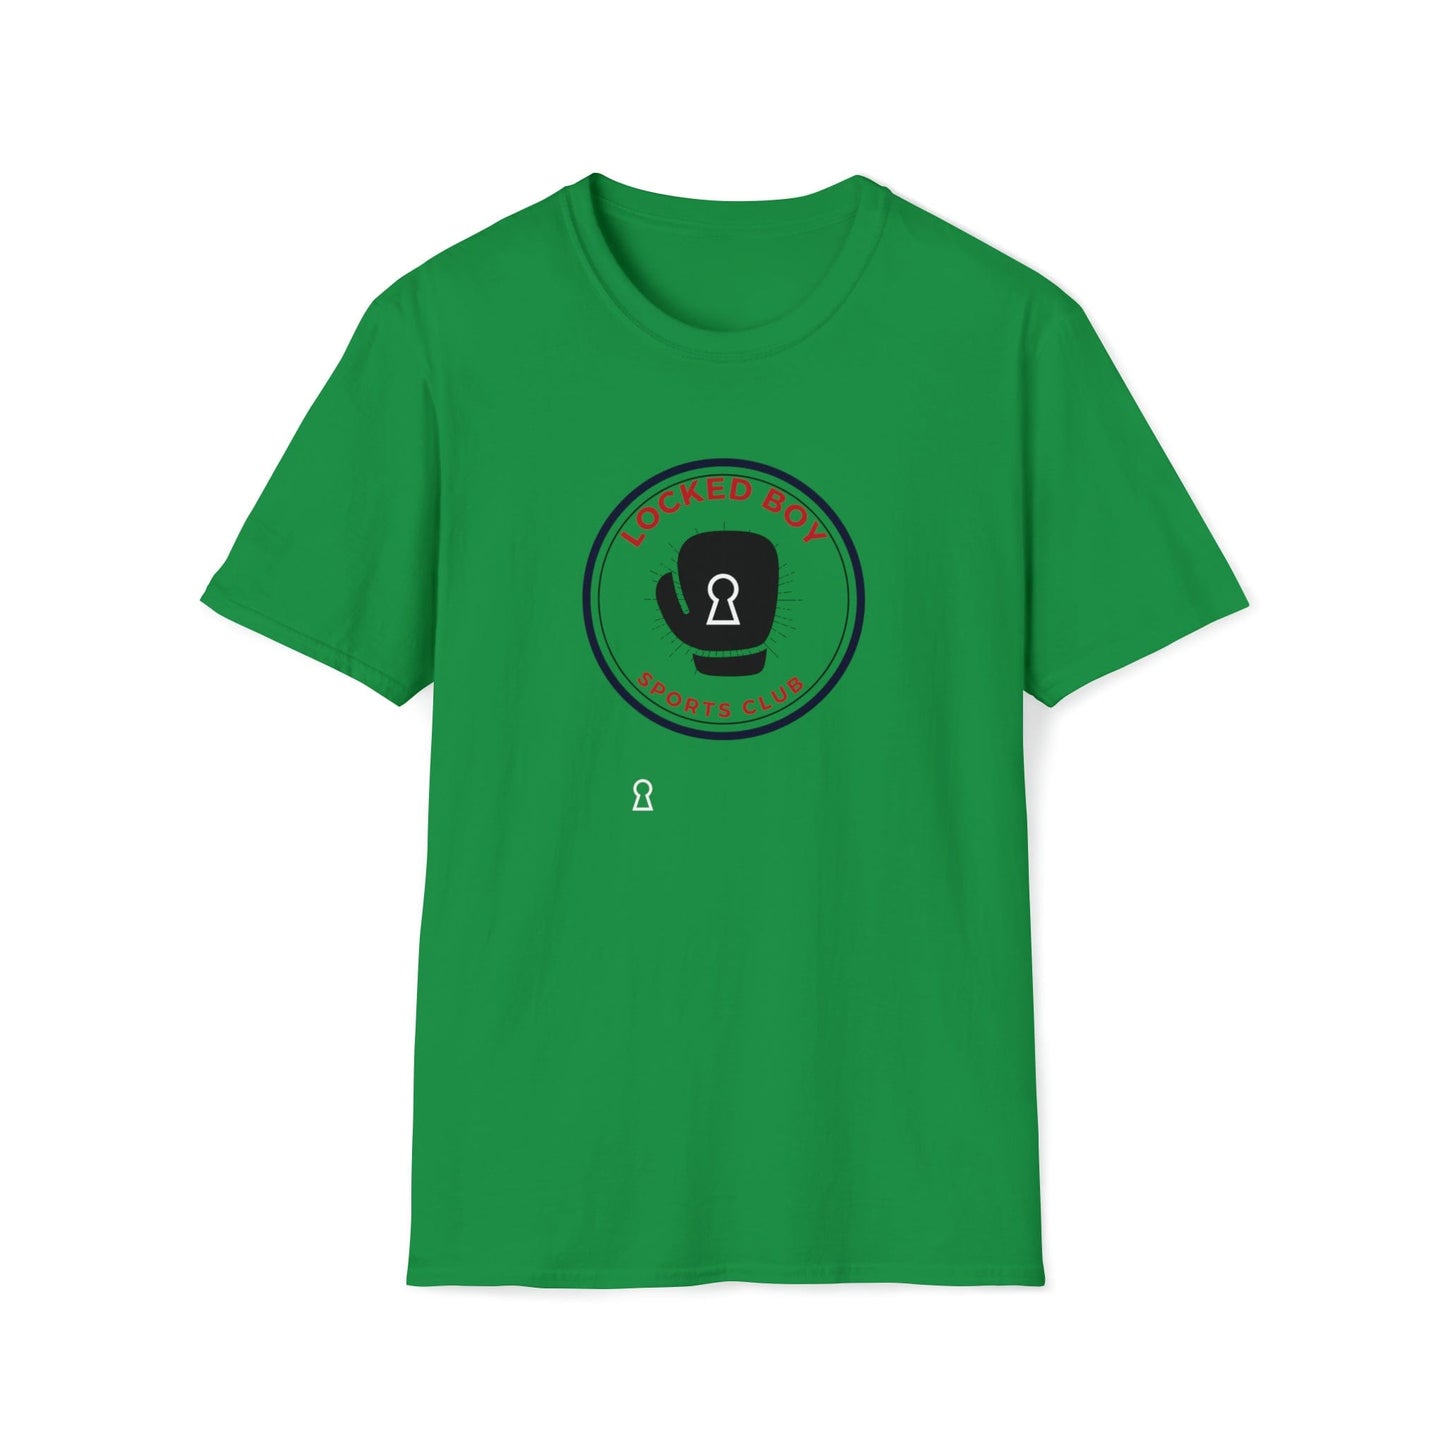 T-Shirt Irish Green / S LockedBoy Sports Club - Chastity Tshirt Boxing Glove LEATHERDADDY BATOR